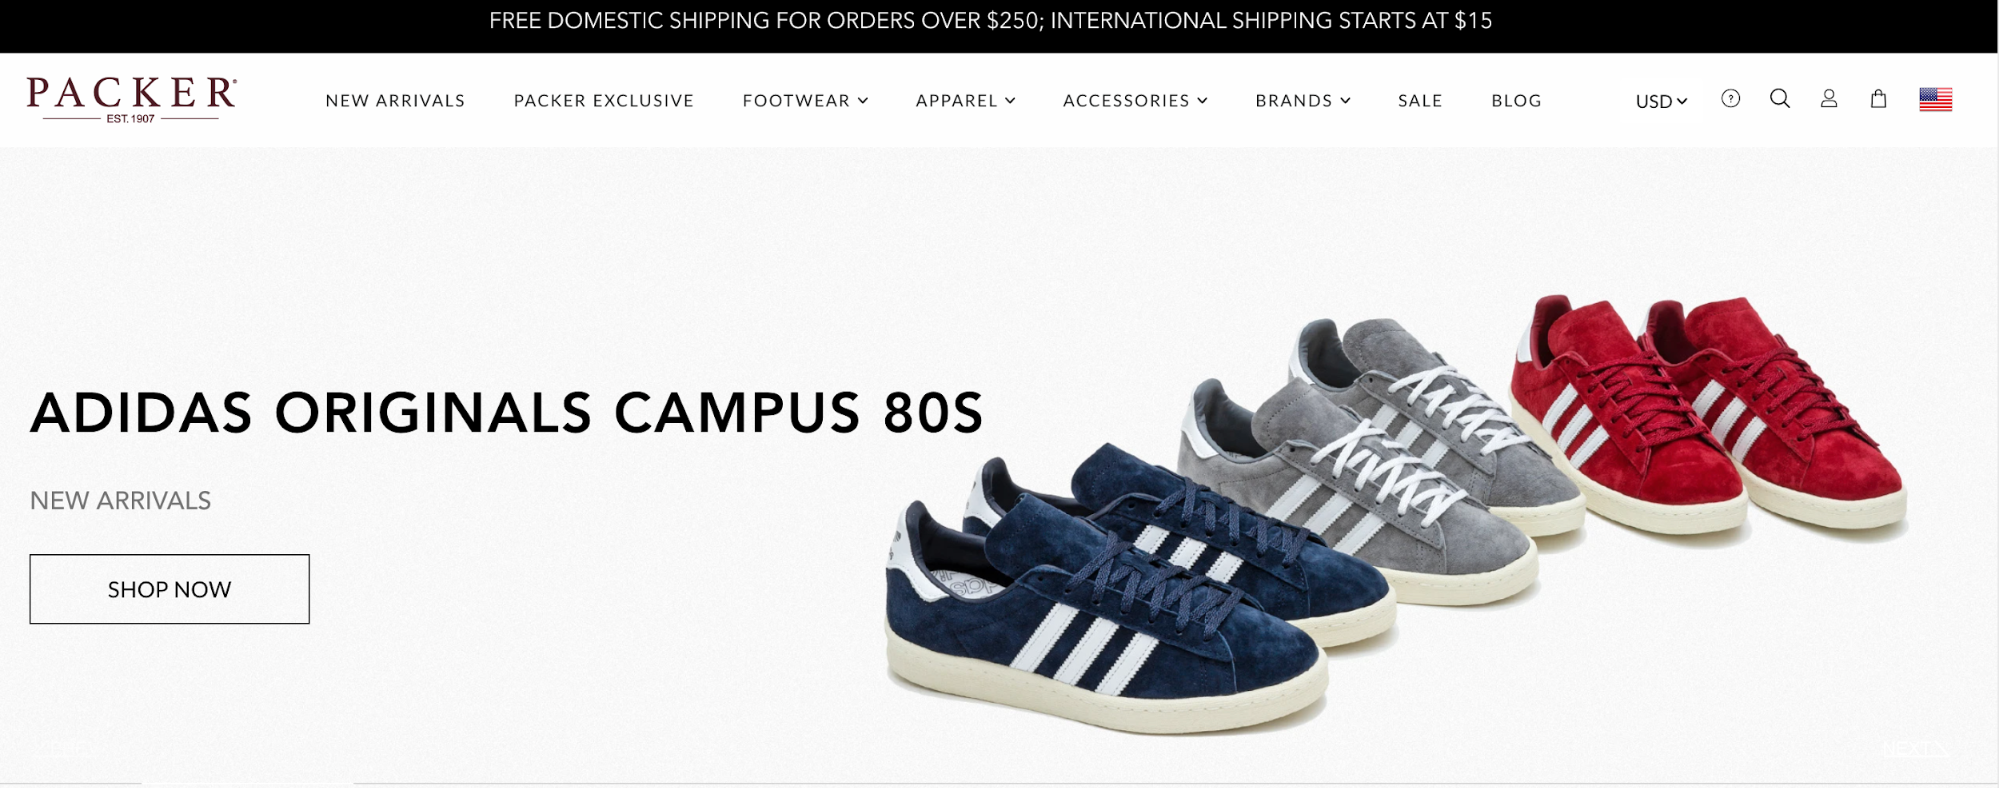 Packer Shoes网站展示Adidas球鞋样品